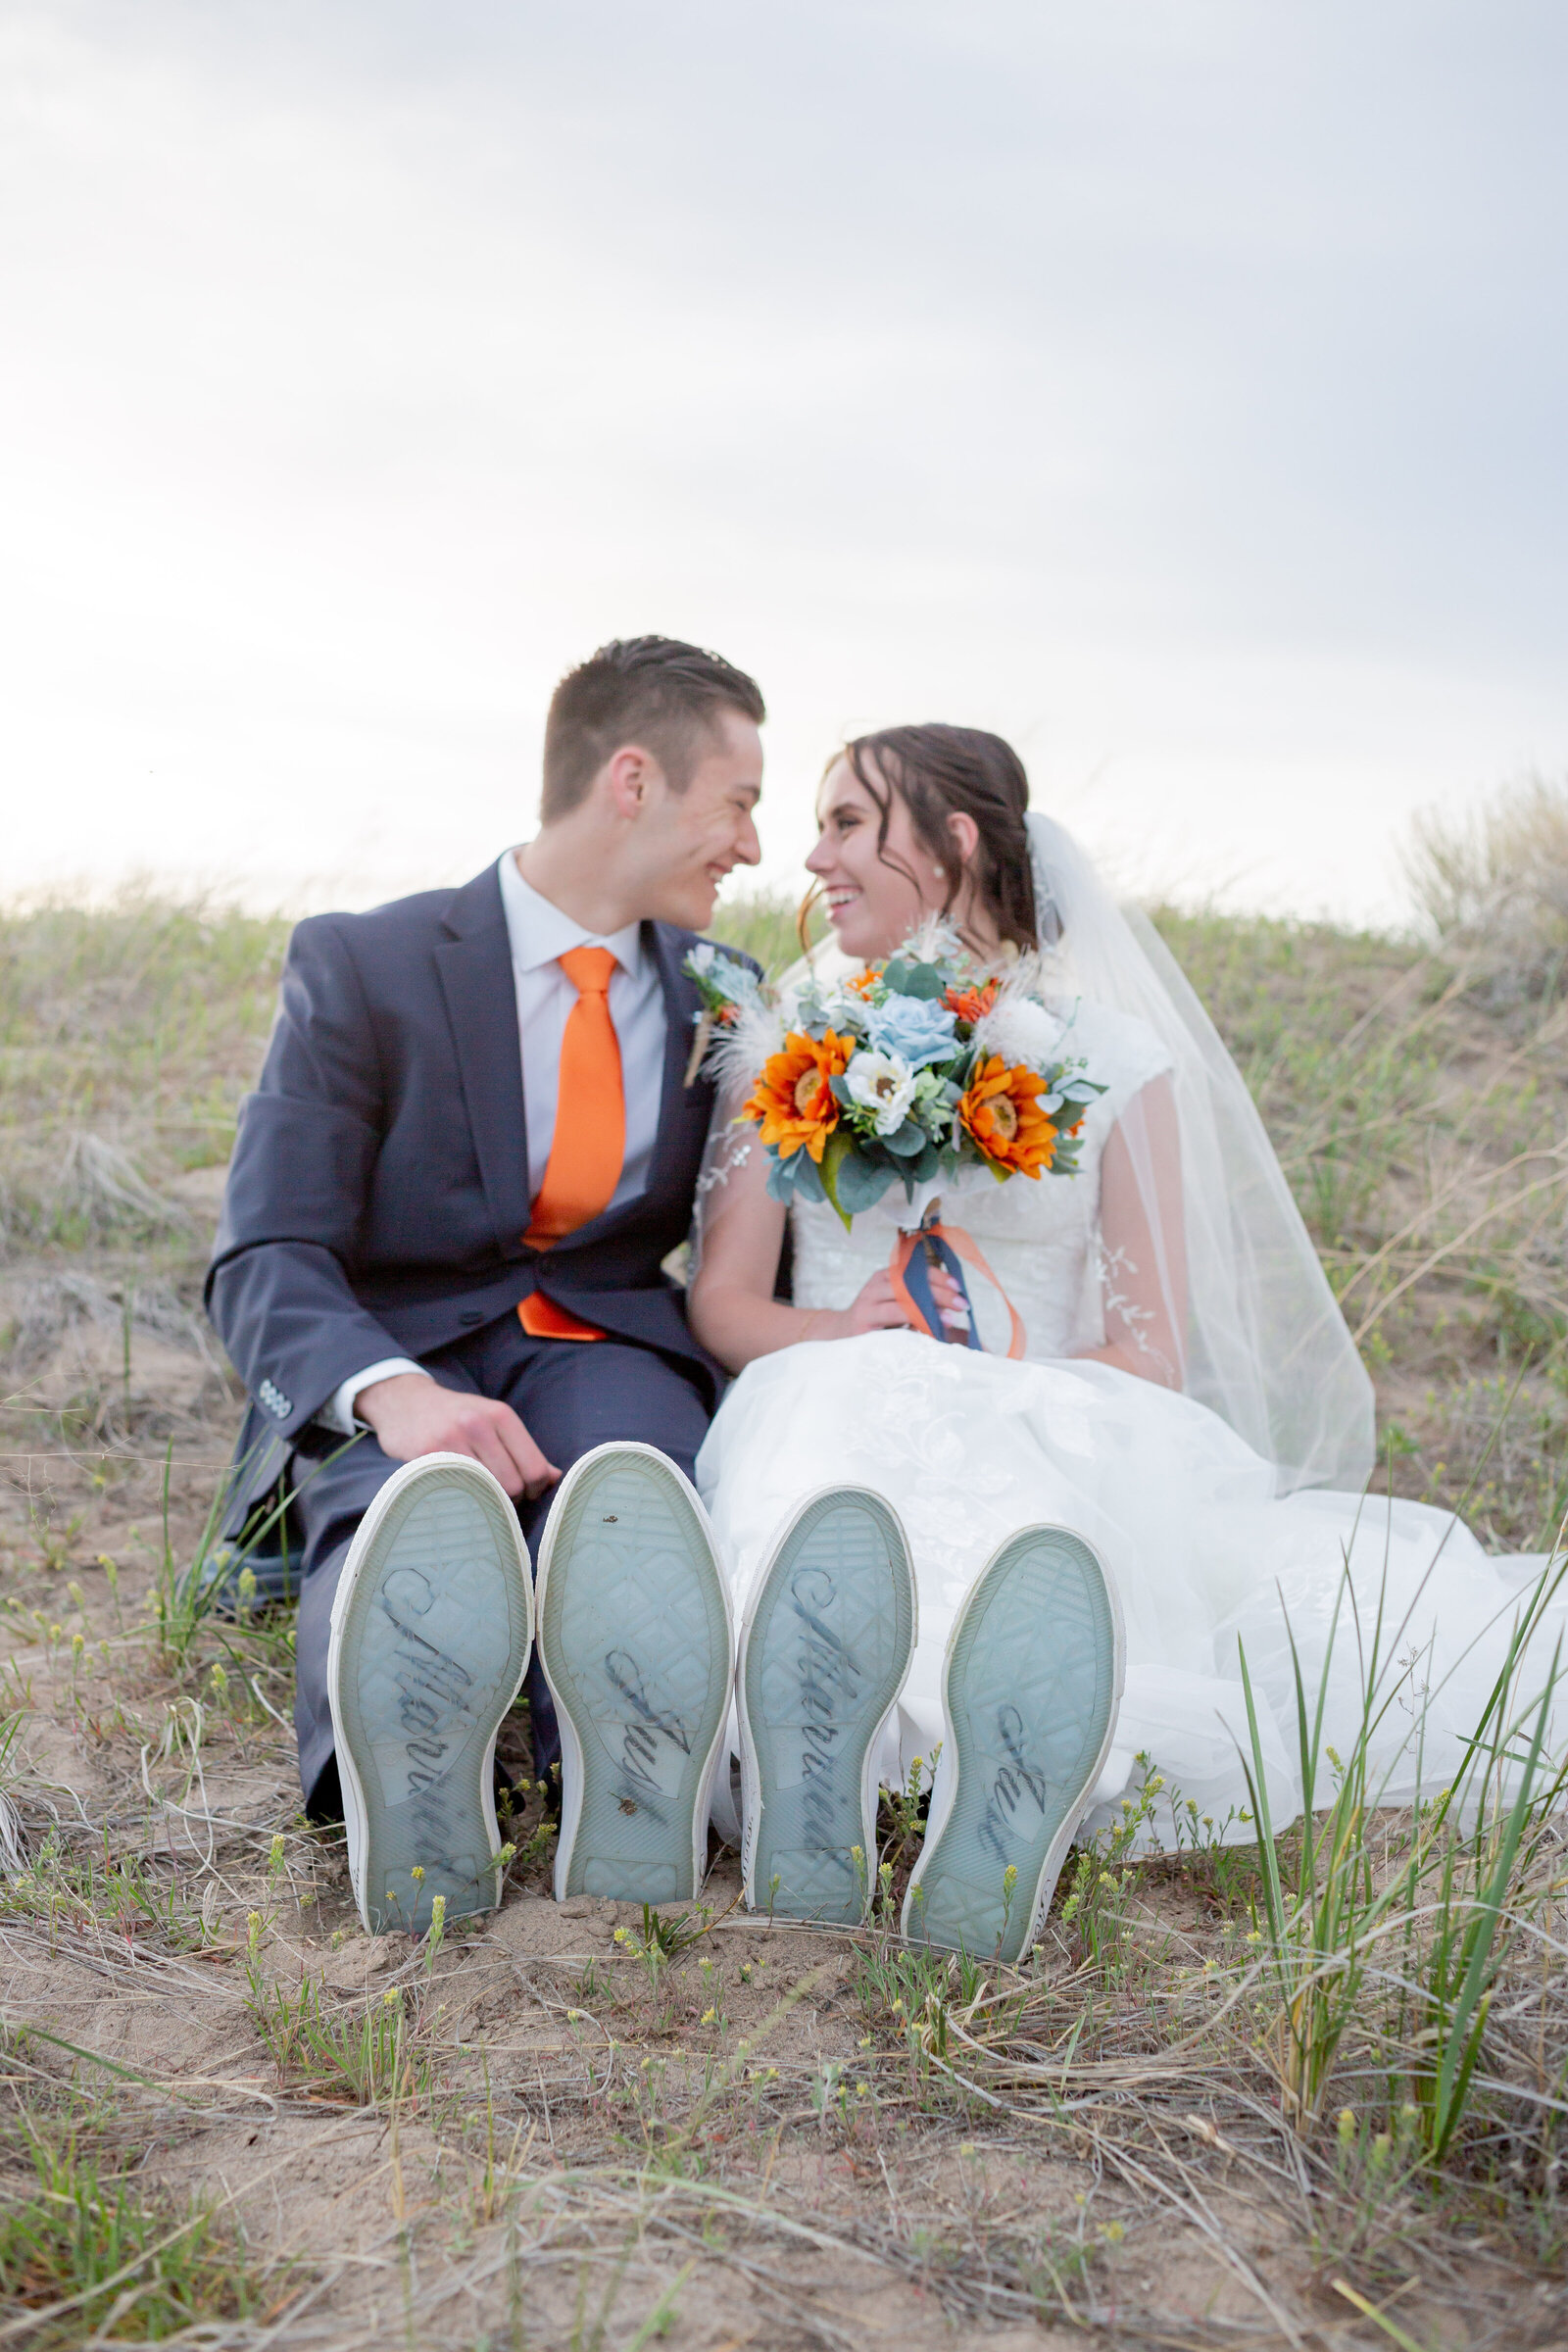 Idaho wedding photographer captures couple sitting together with matching shoes